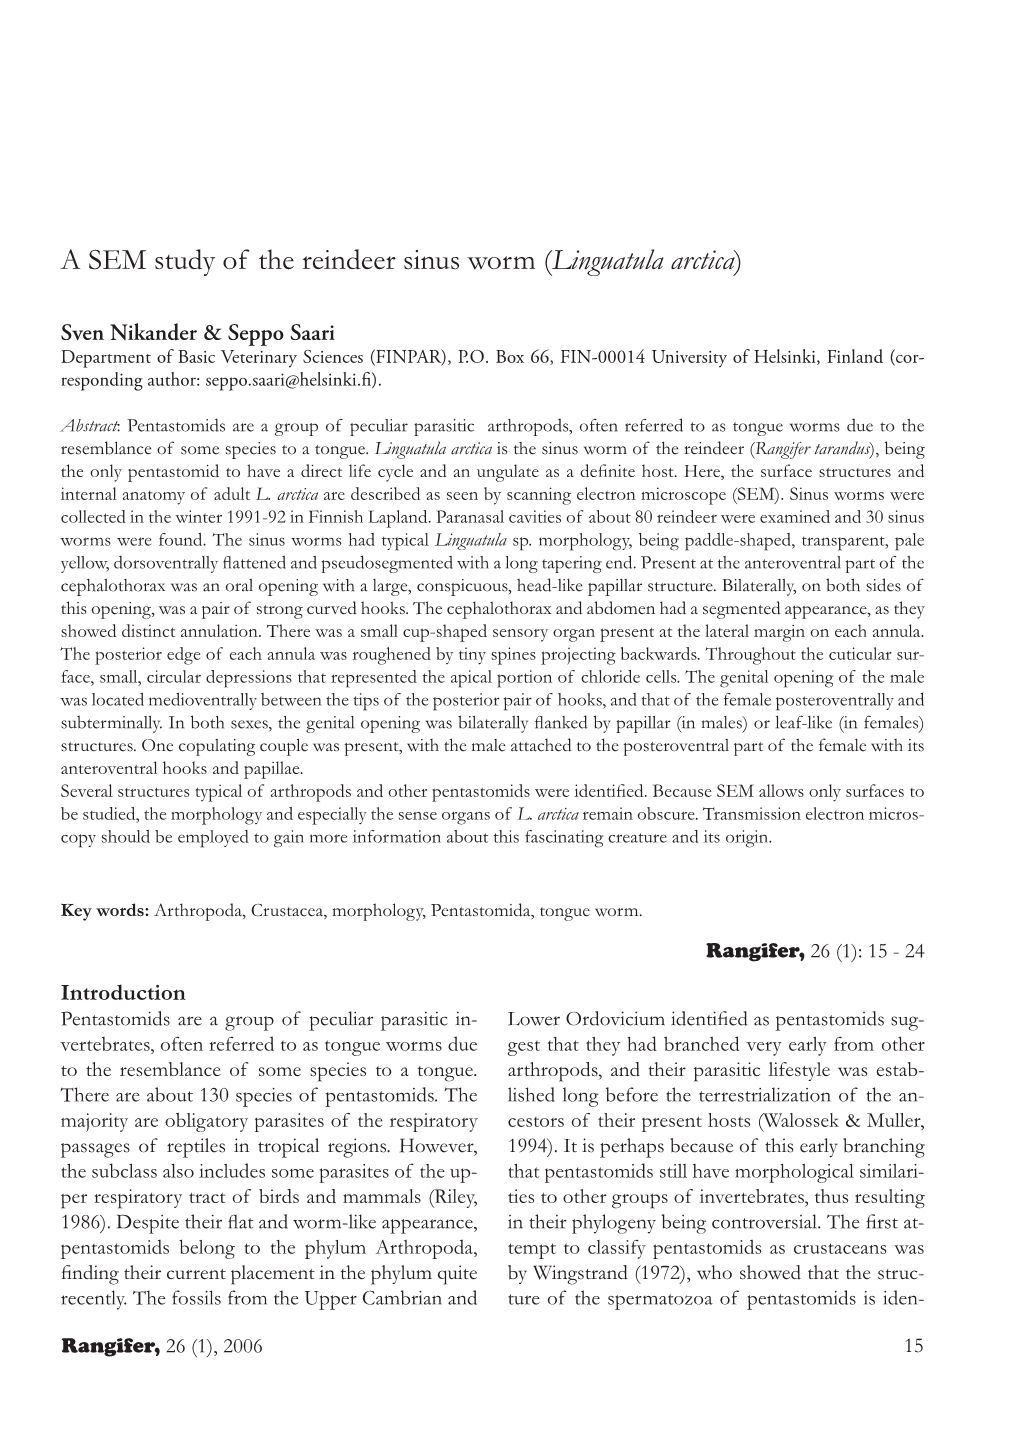 A SEM Study of the Reindeer Sinus Worm (Linguatula Arctica)